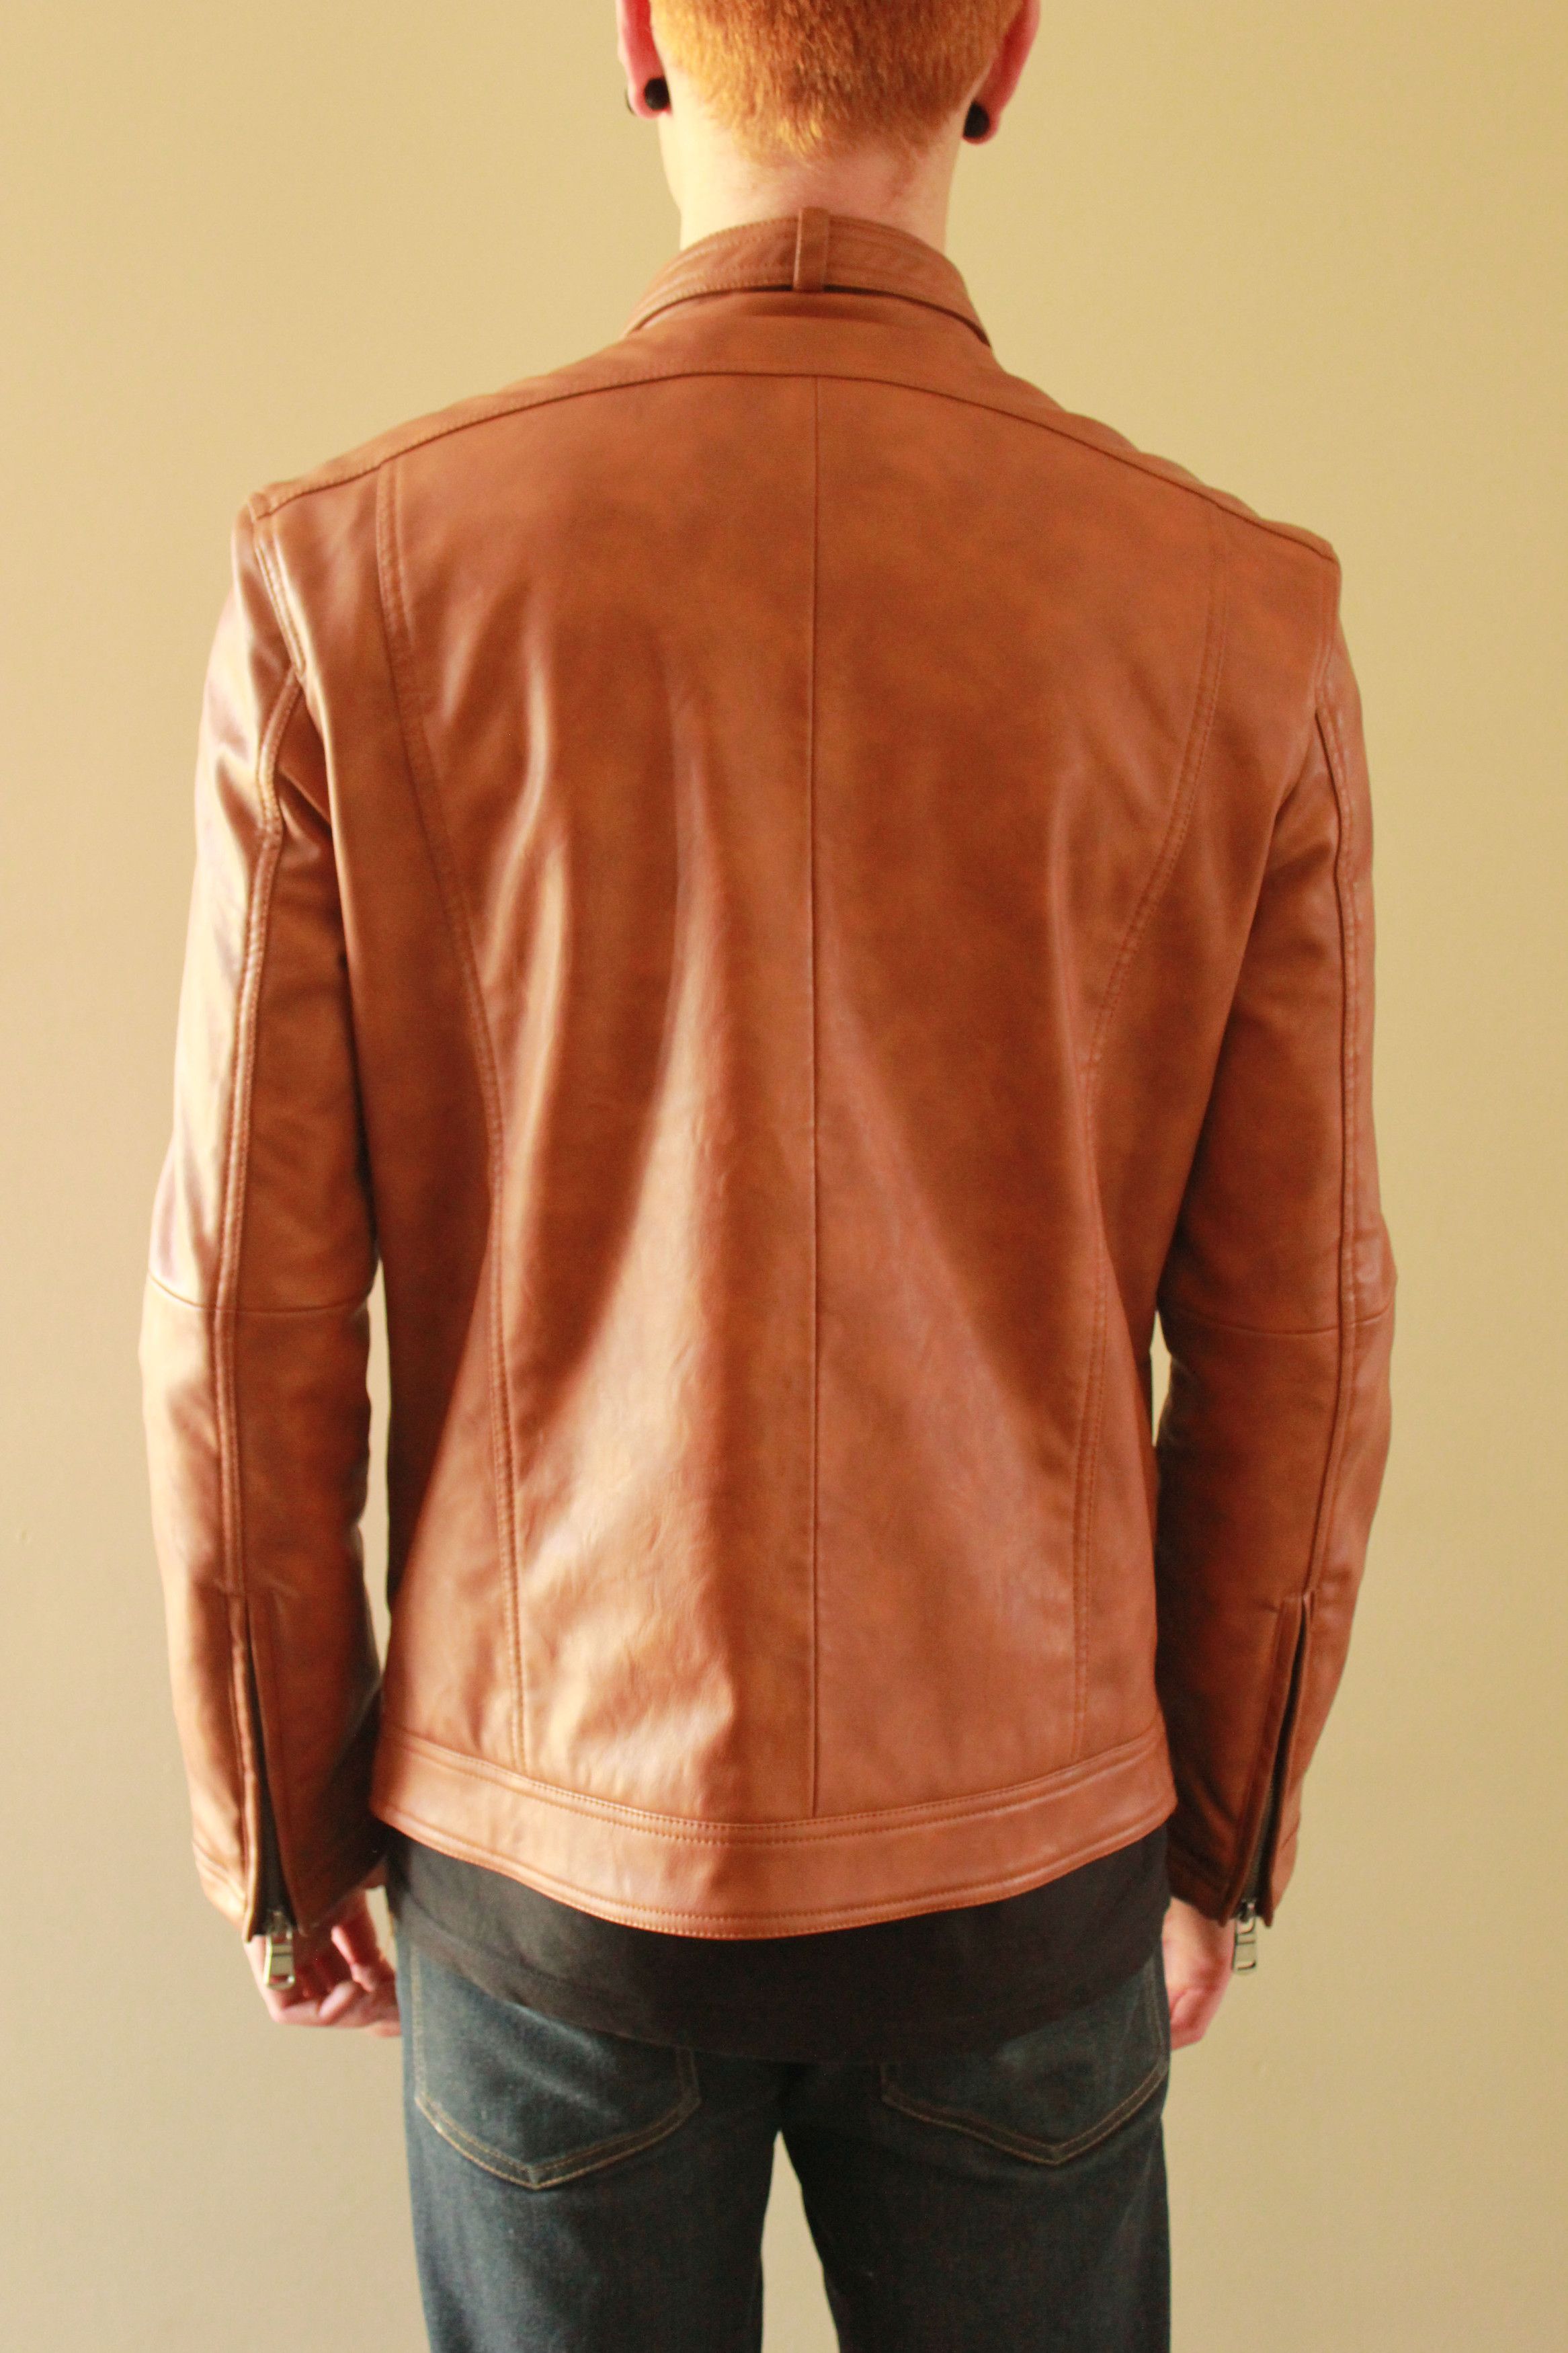 The Academee Brand Caramel Leather-Look Jacket Size US M / EU 48-50 / 2 - 4 Thumbnail